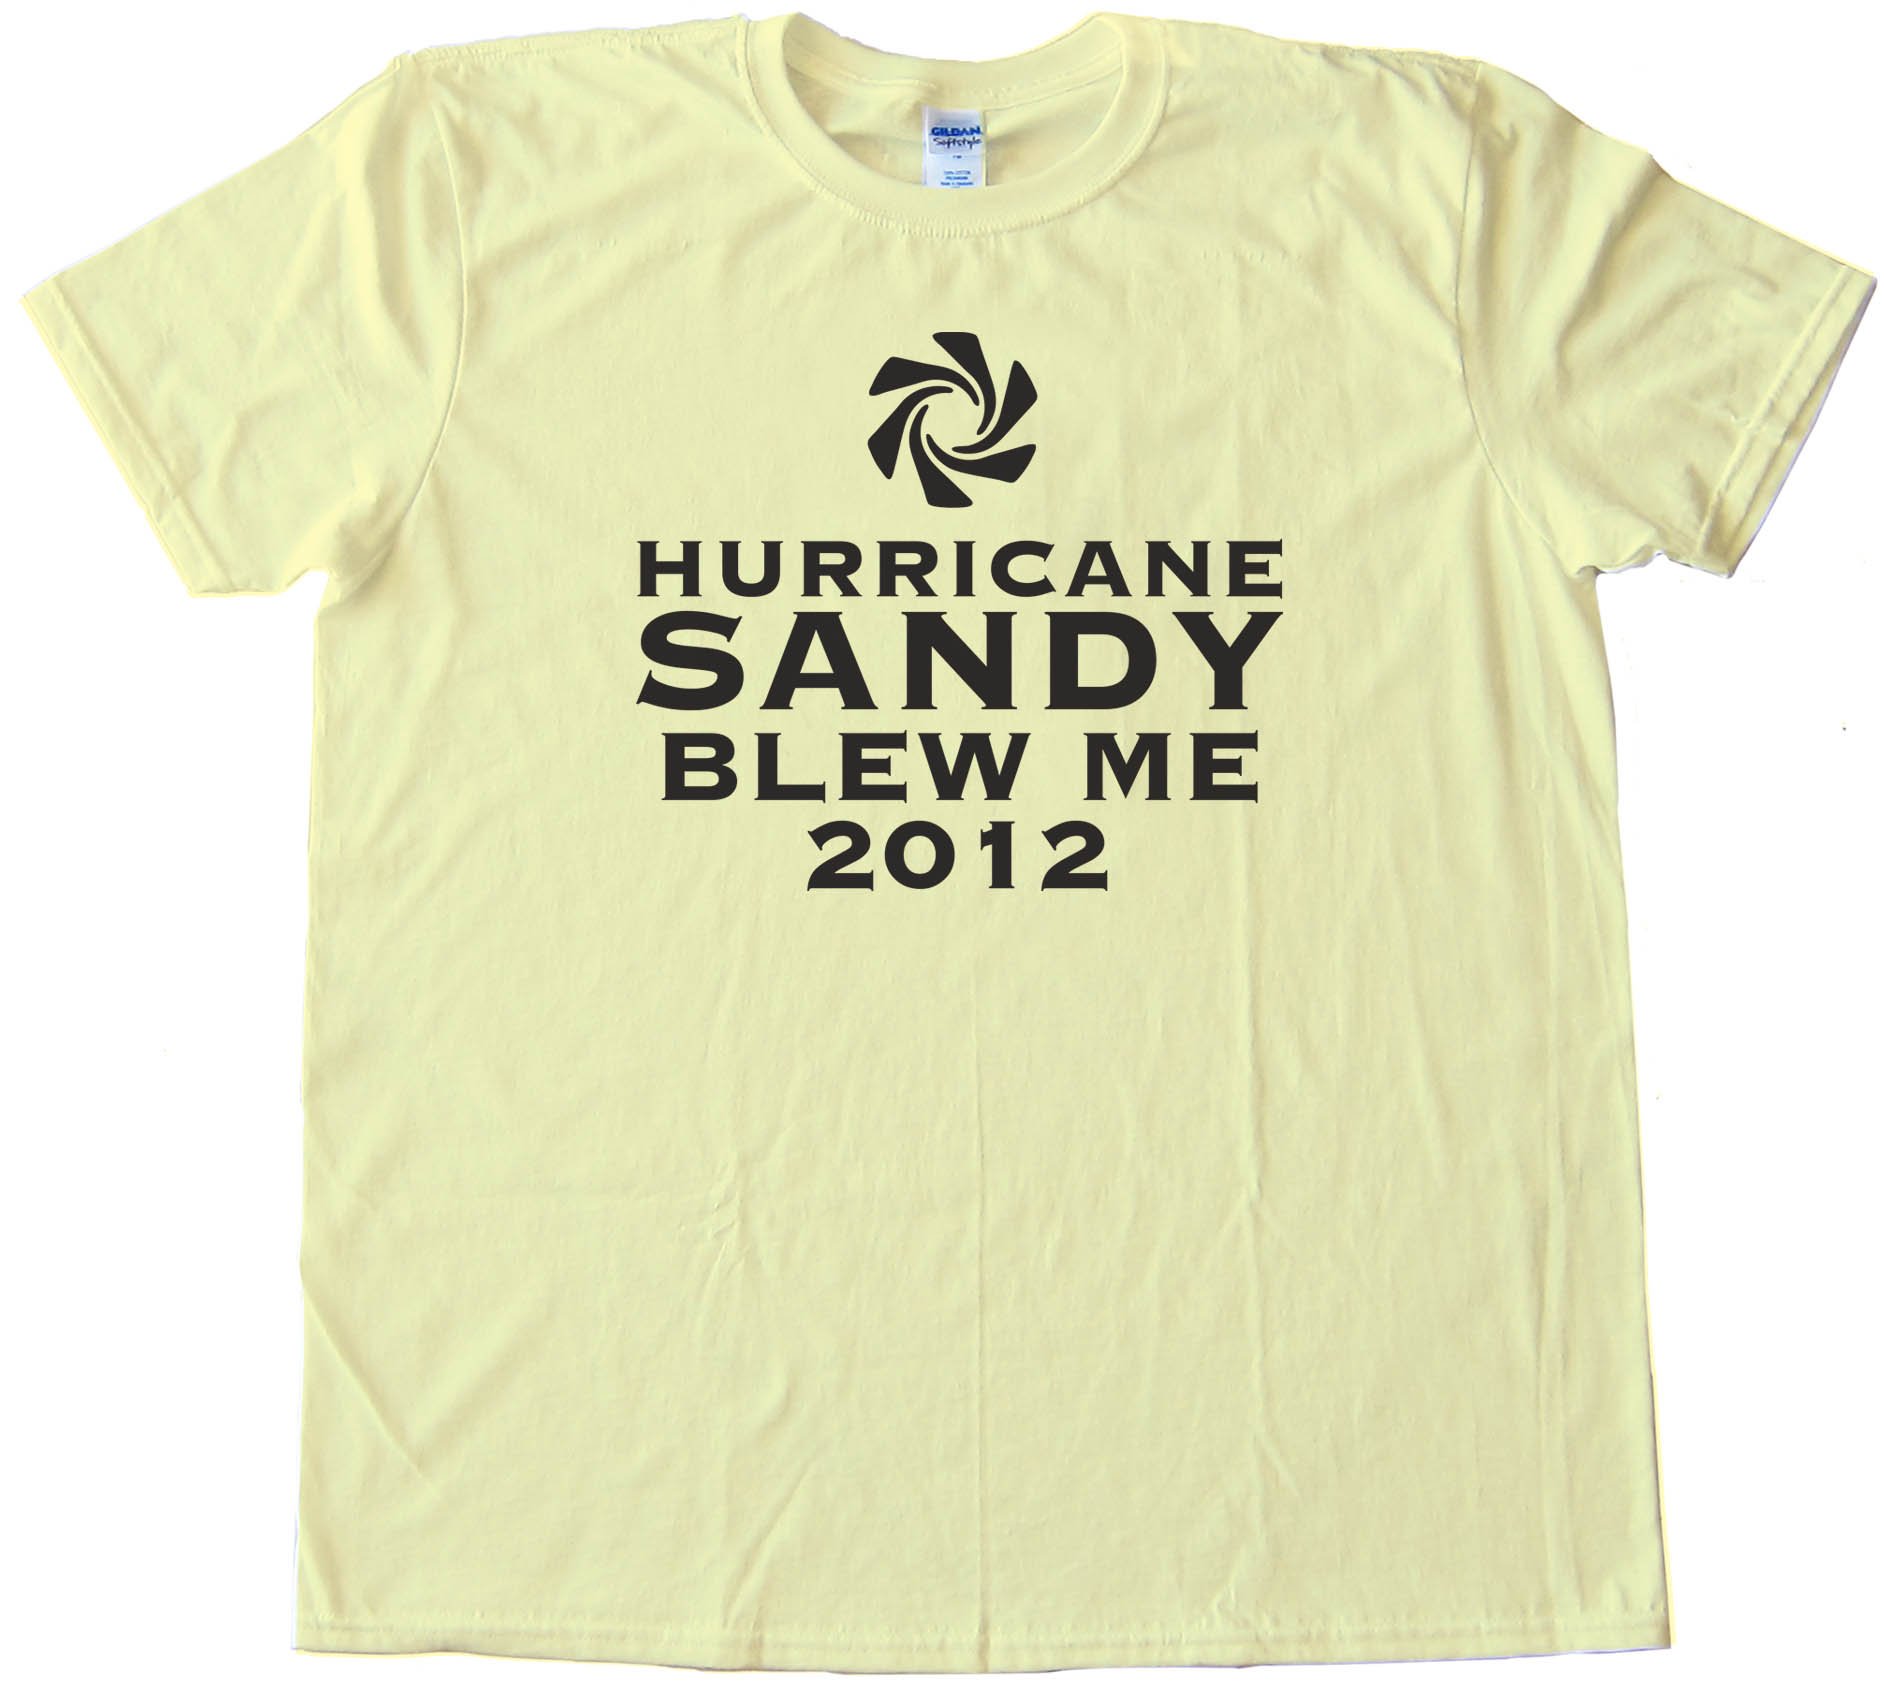 Hurricane Sandy Blew Me 2012 - Tee Shirt